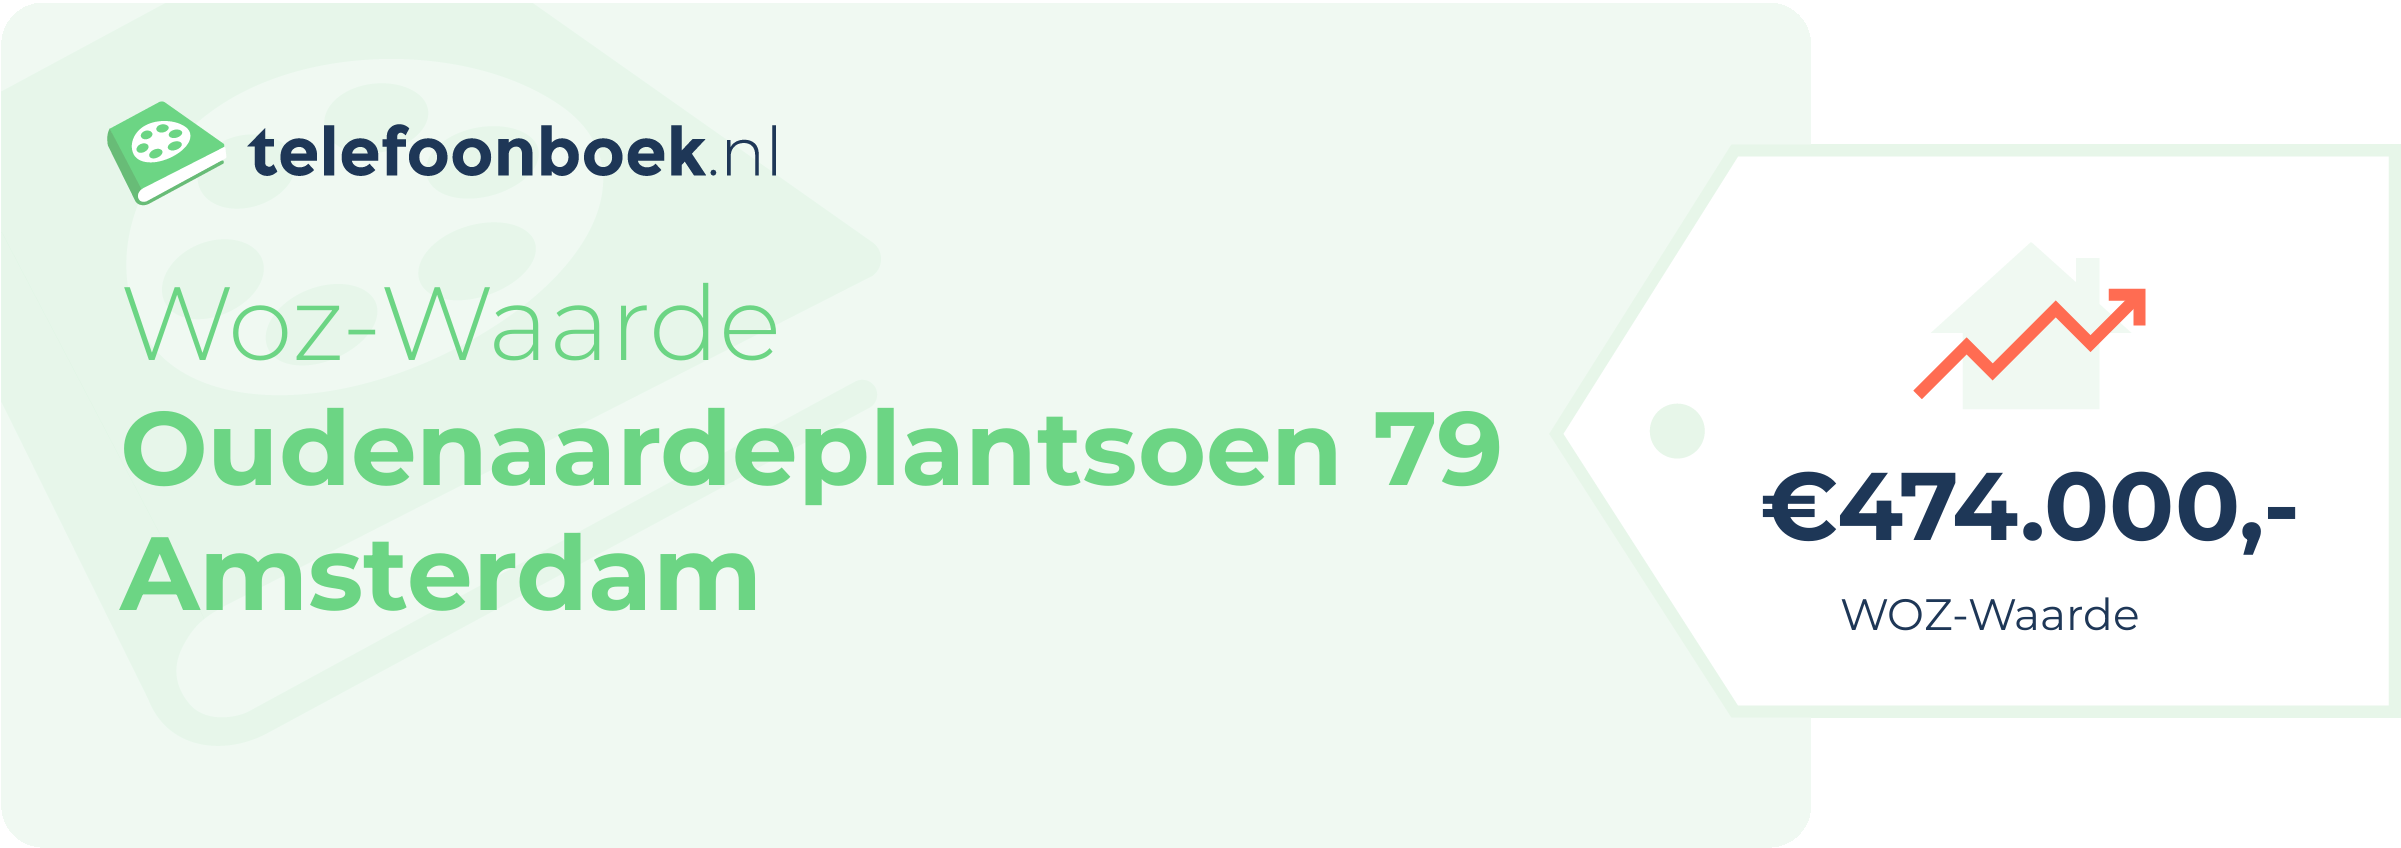 WOZ-waarde Oudenaardeplantsoen 79 Amsterdam